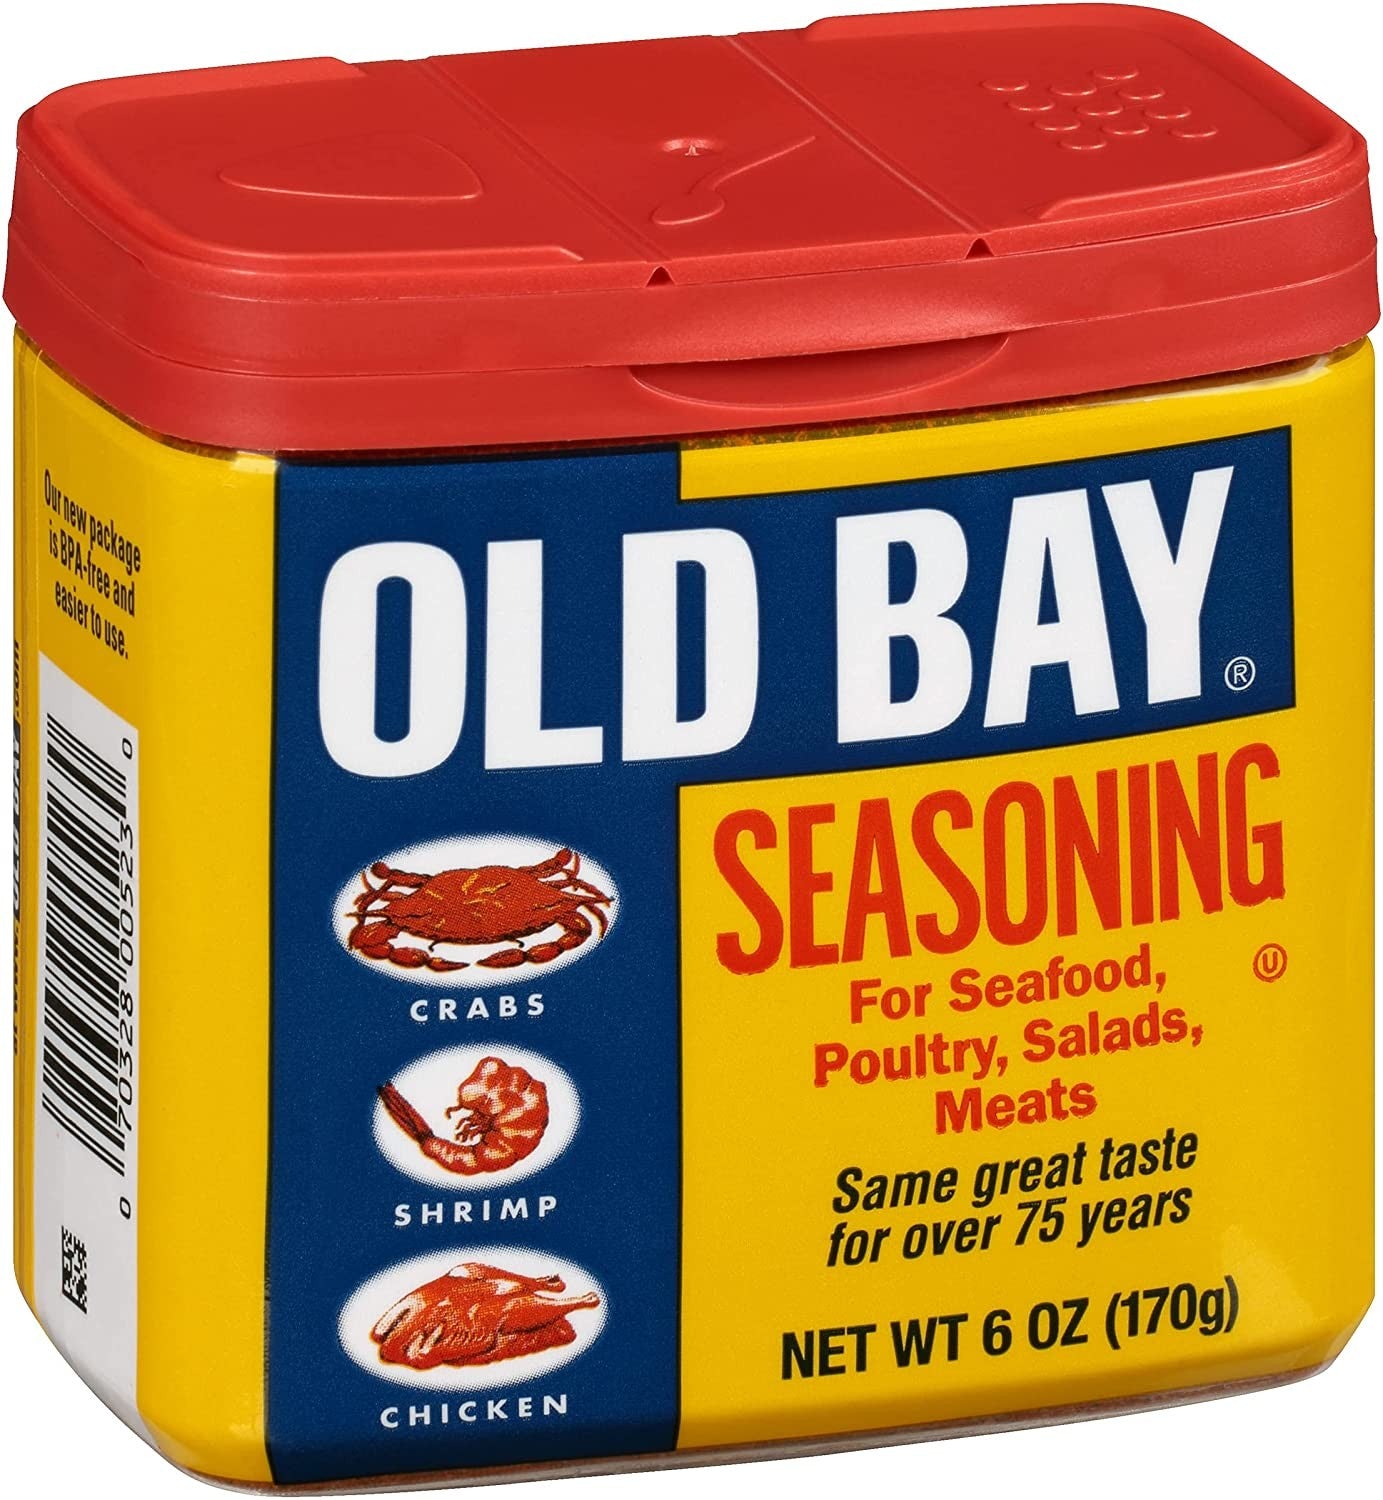 「Old Bay」Traditional seasoning